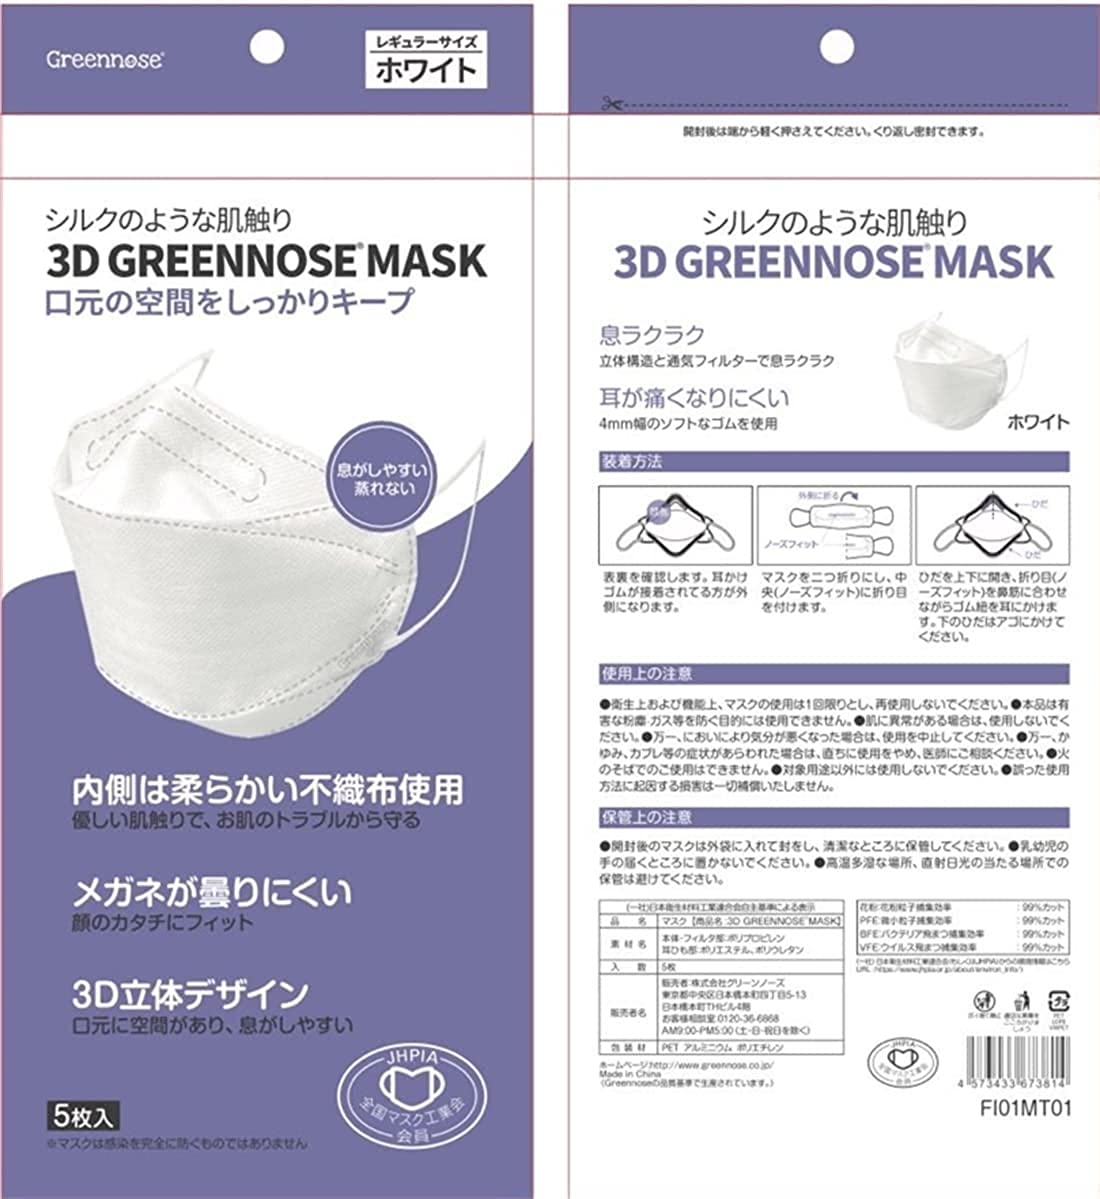 Greennose(グリーンノーズ) 3D GREENNOSE MASKの商品画像3 